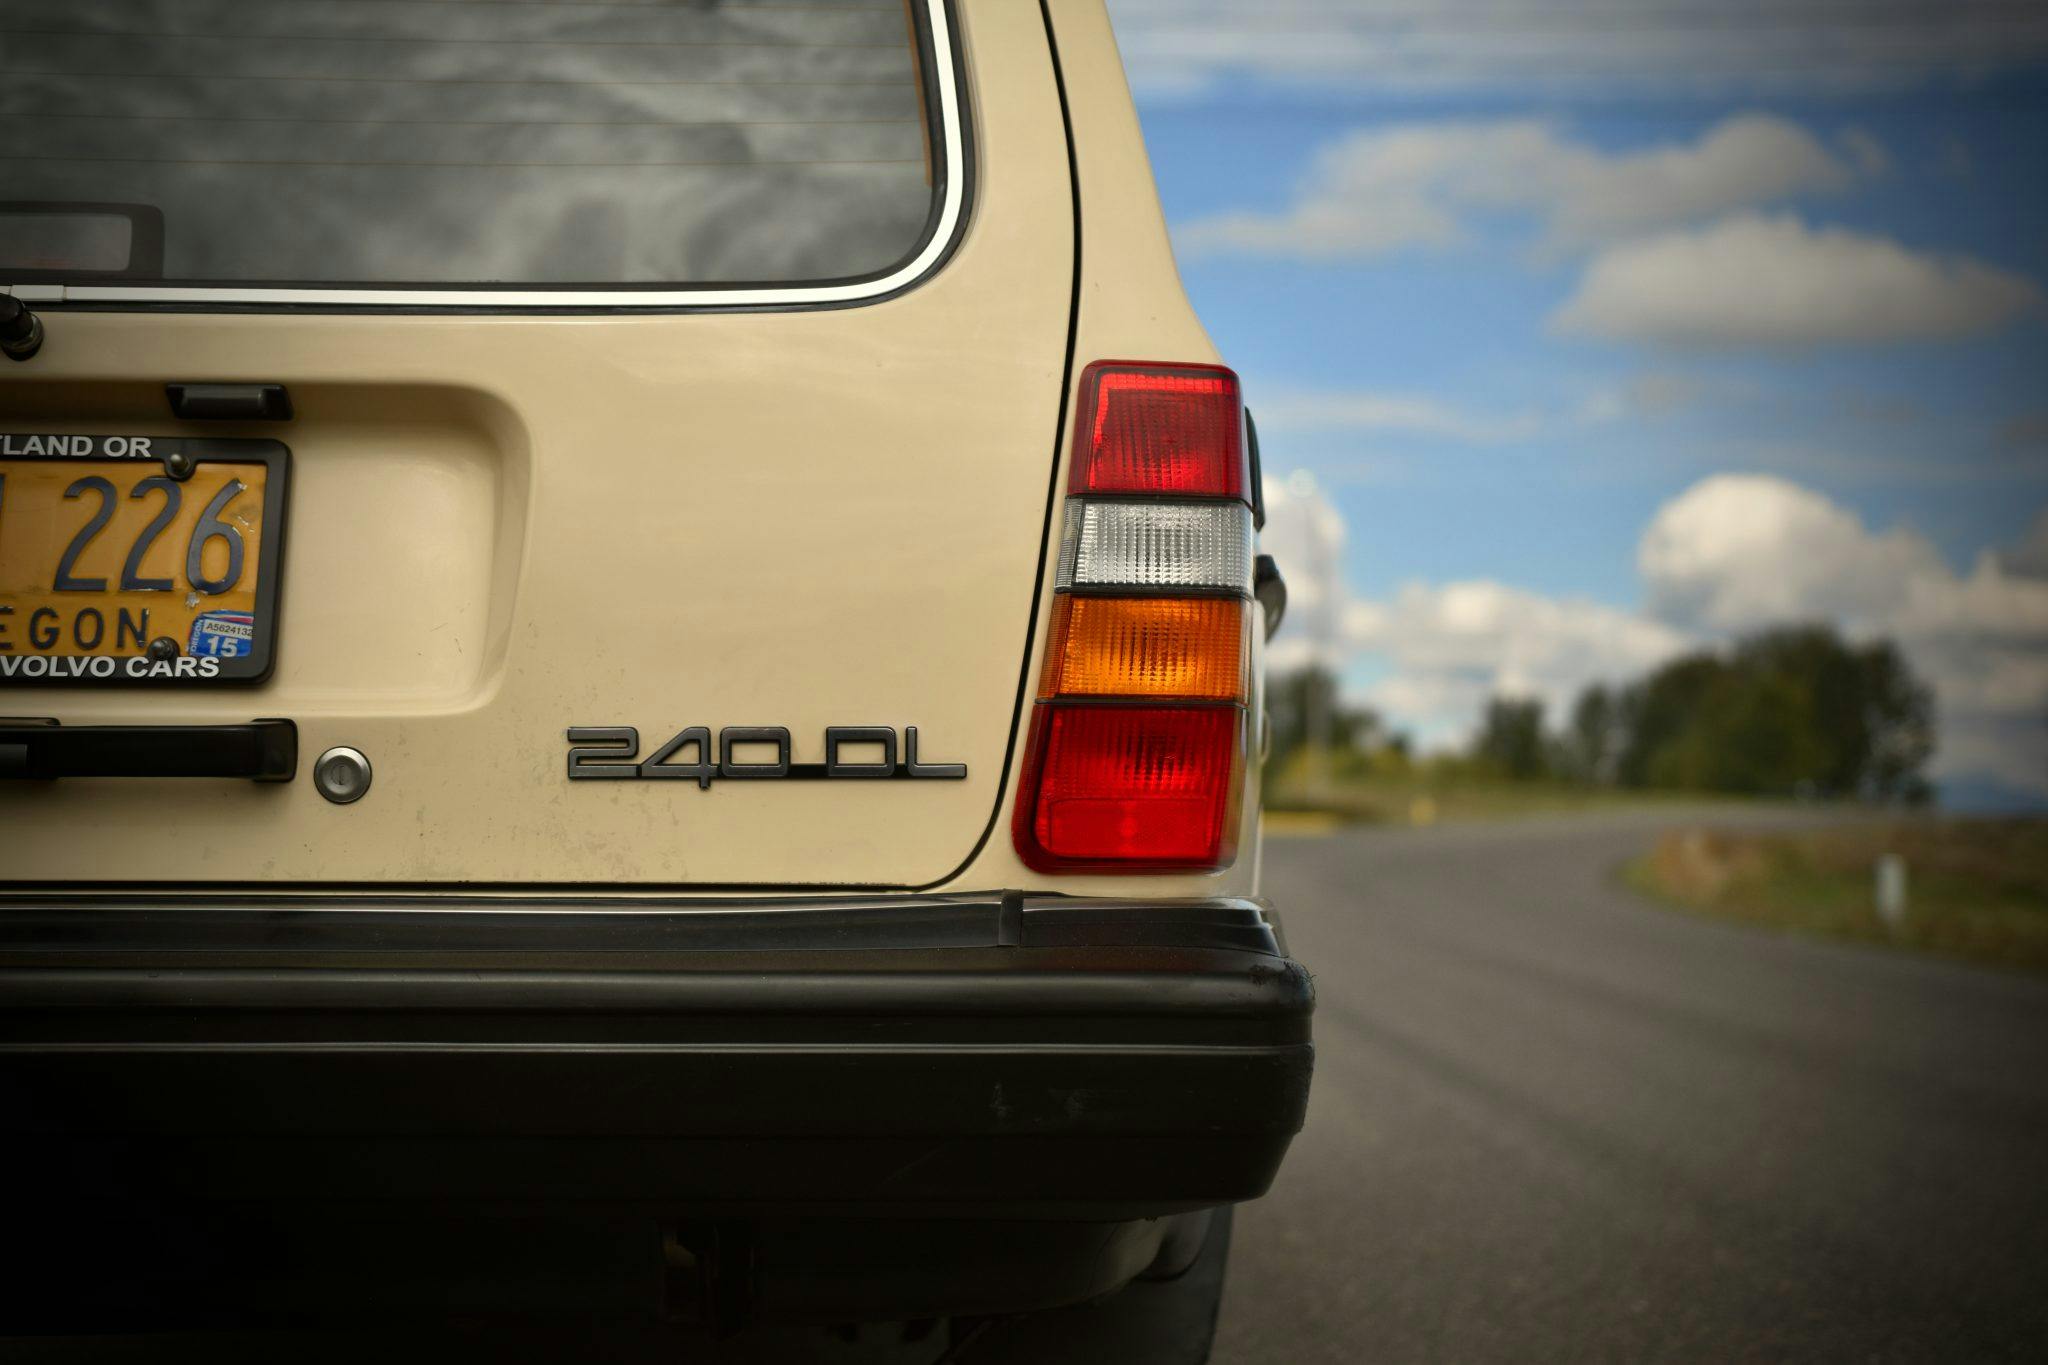 1987 Volvo 240 Wagon DL rear right model badging